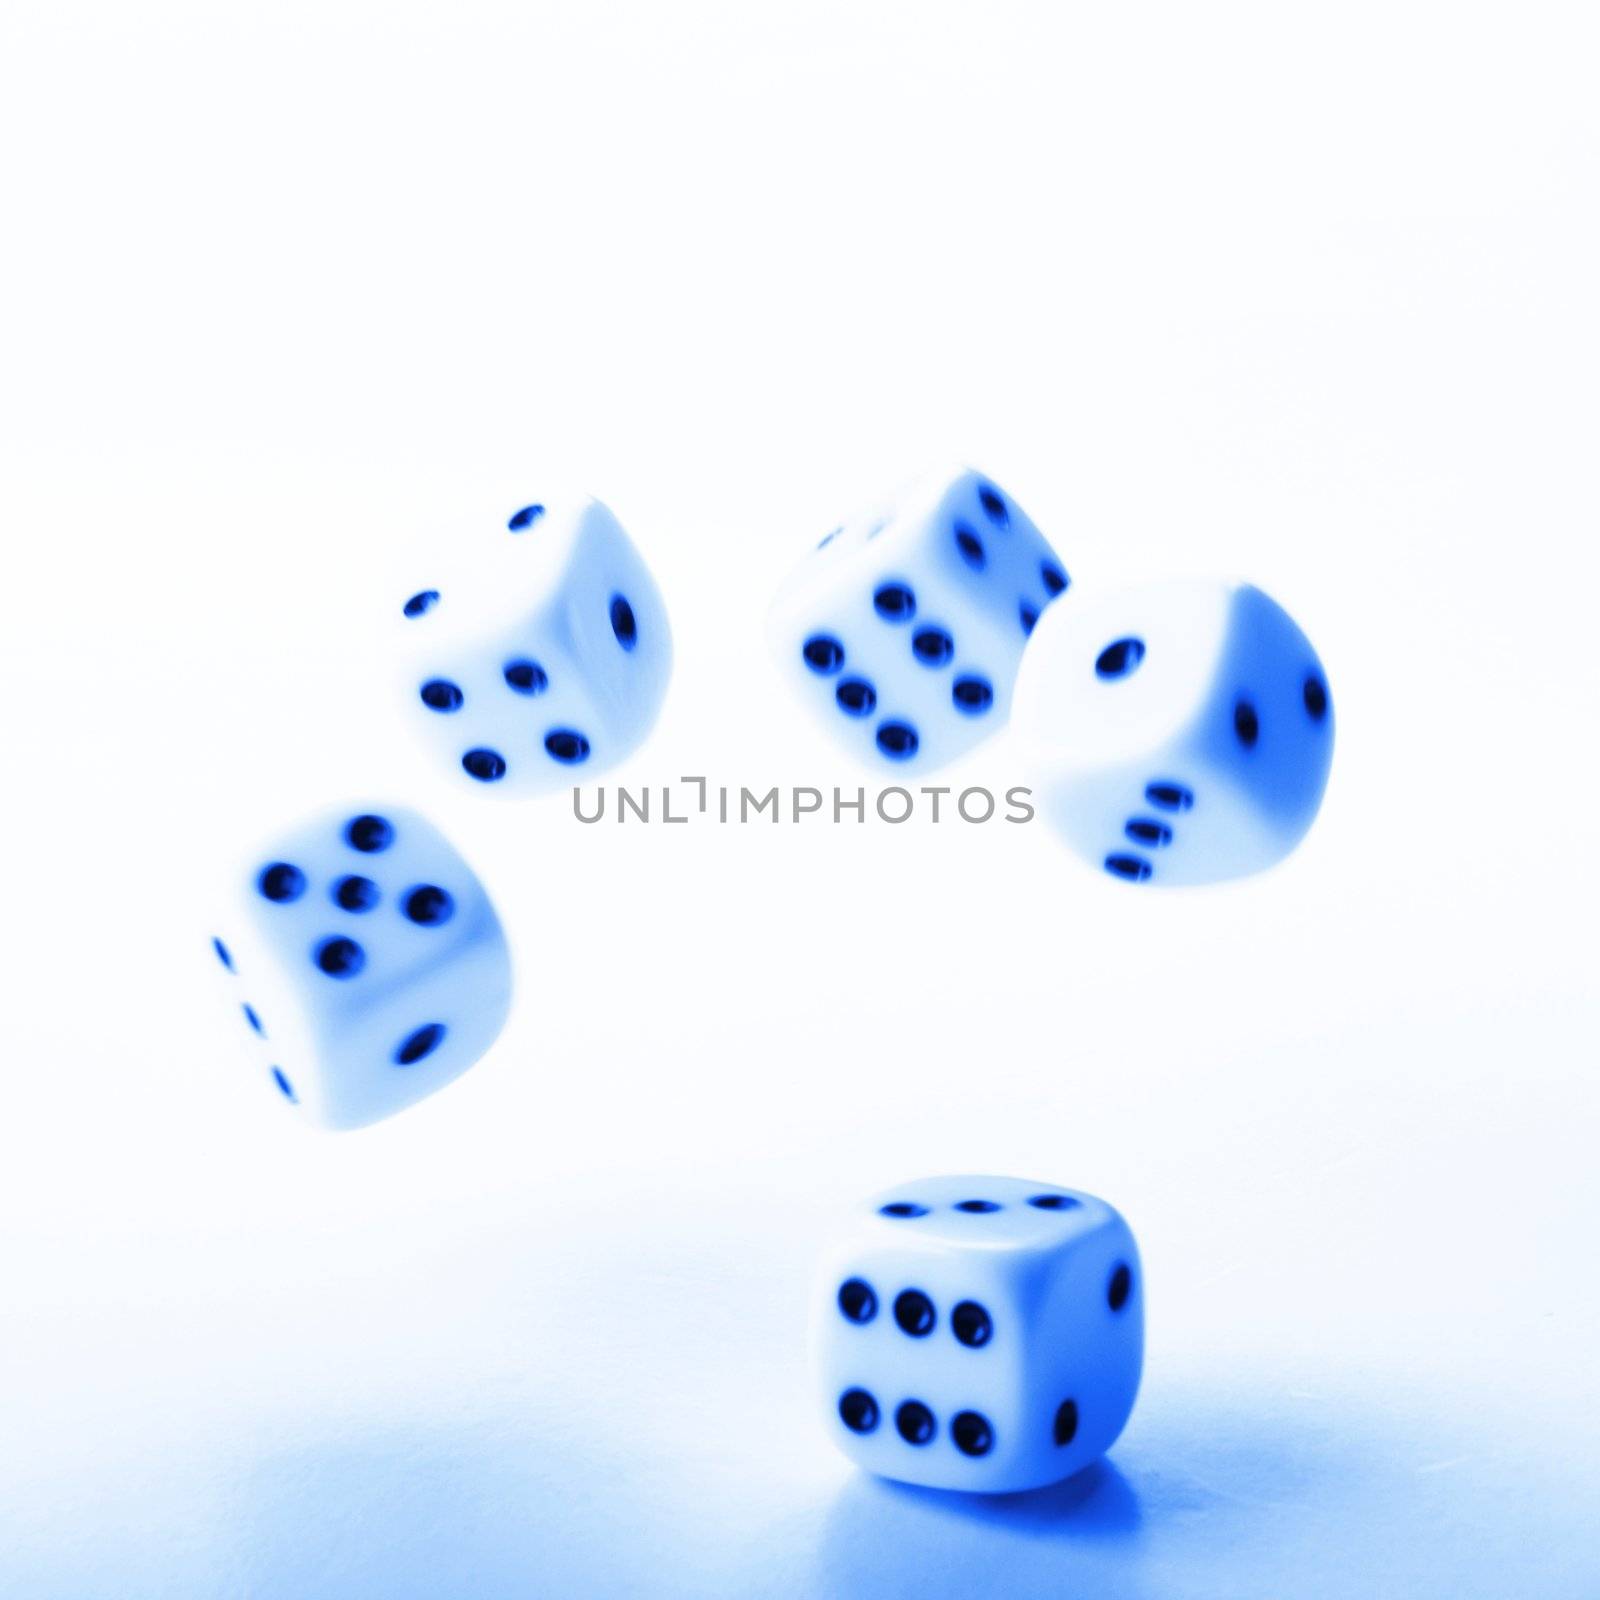 falling dice showing random fortune or casino concept